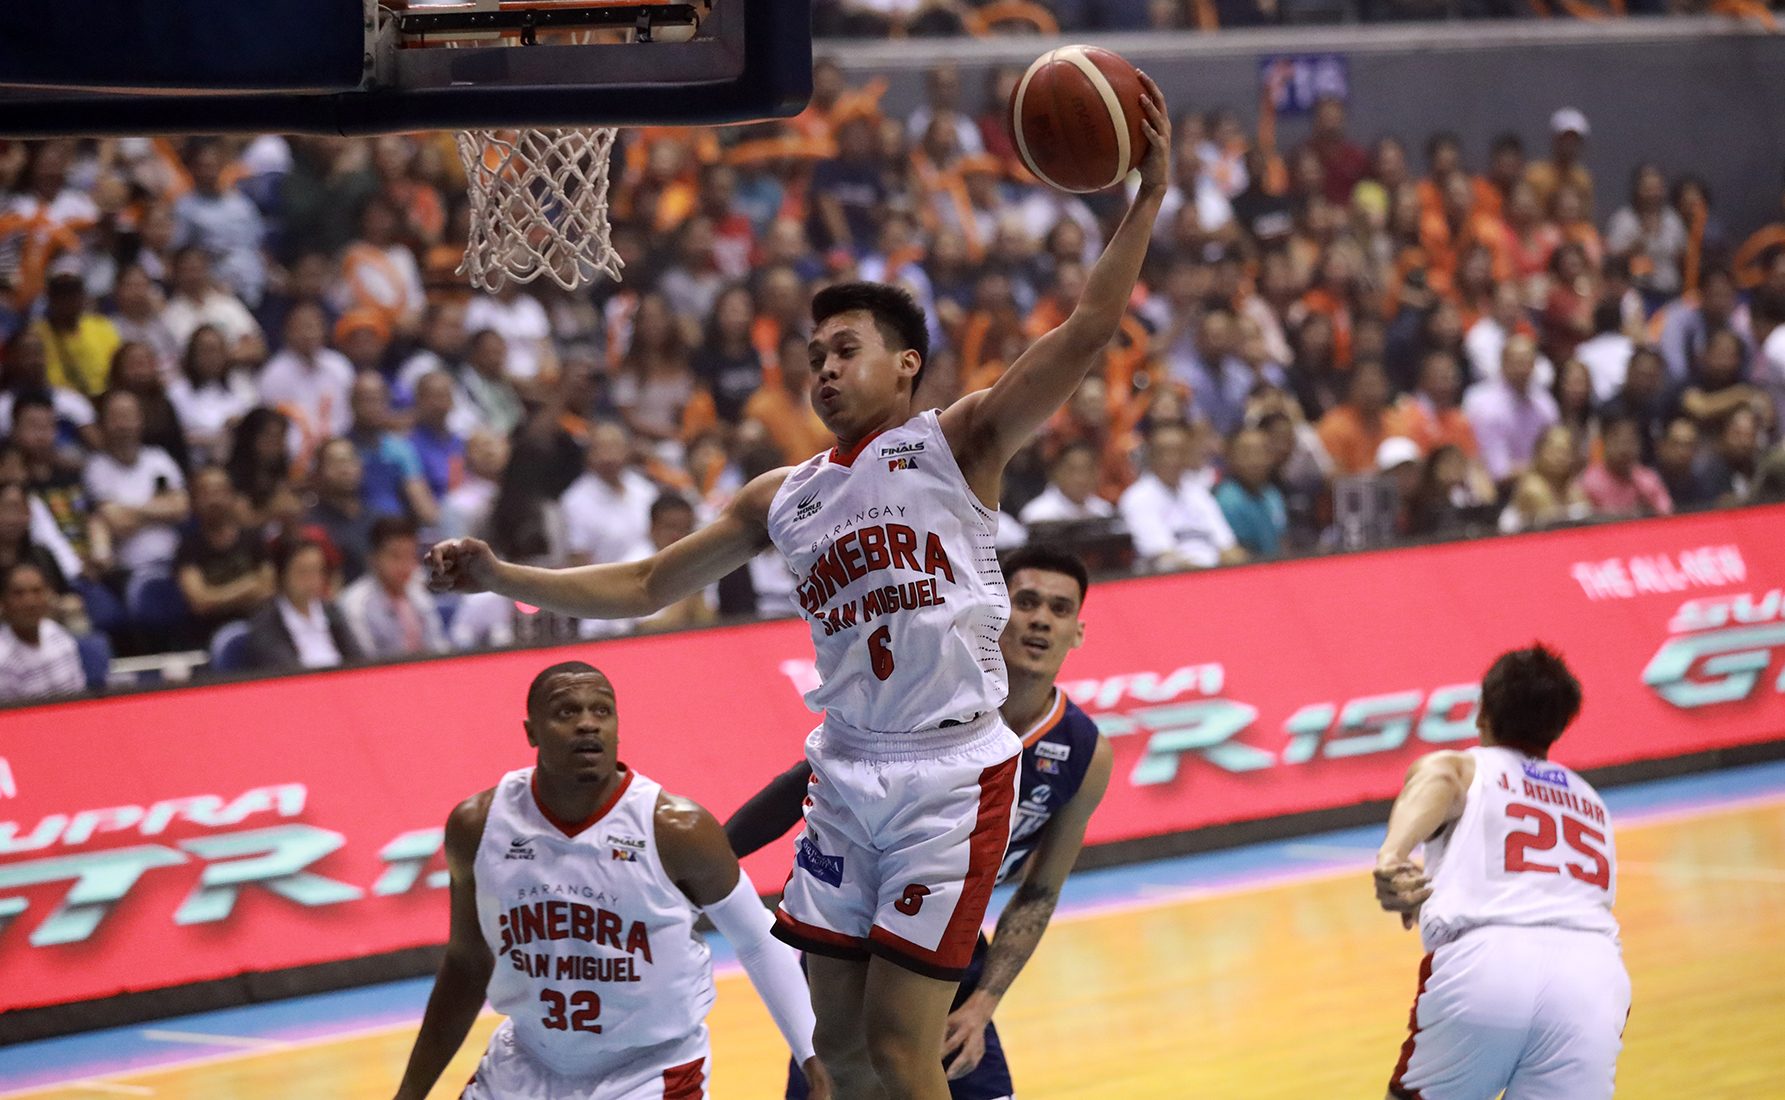 Fans return as PBA brings back games to Araneta Coliseum